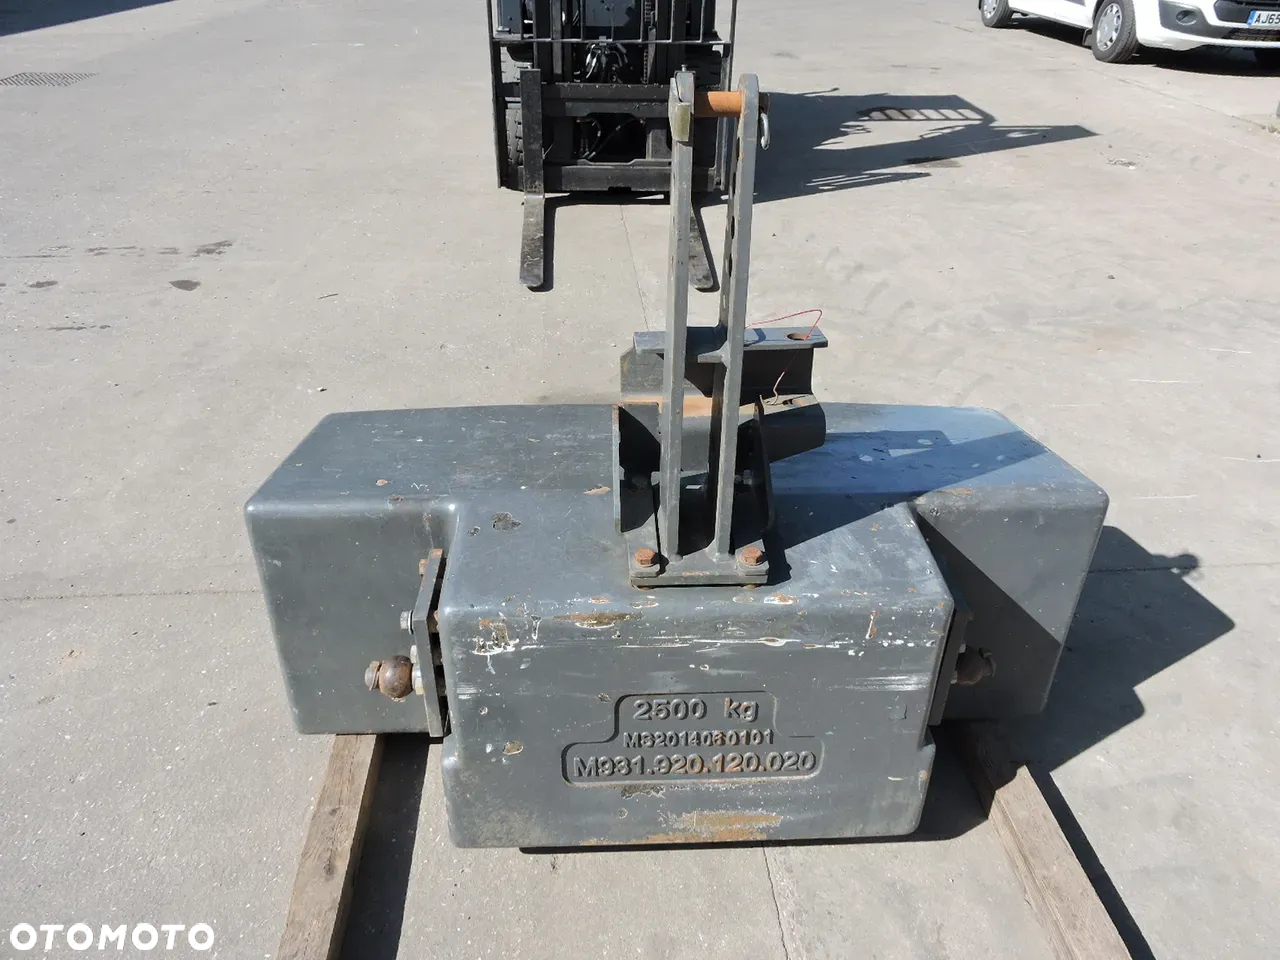 Obciążnik balast  Fendt 3300 kg jak nowy na TUZ 2500 1800 1250 - 4